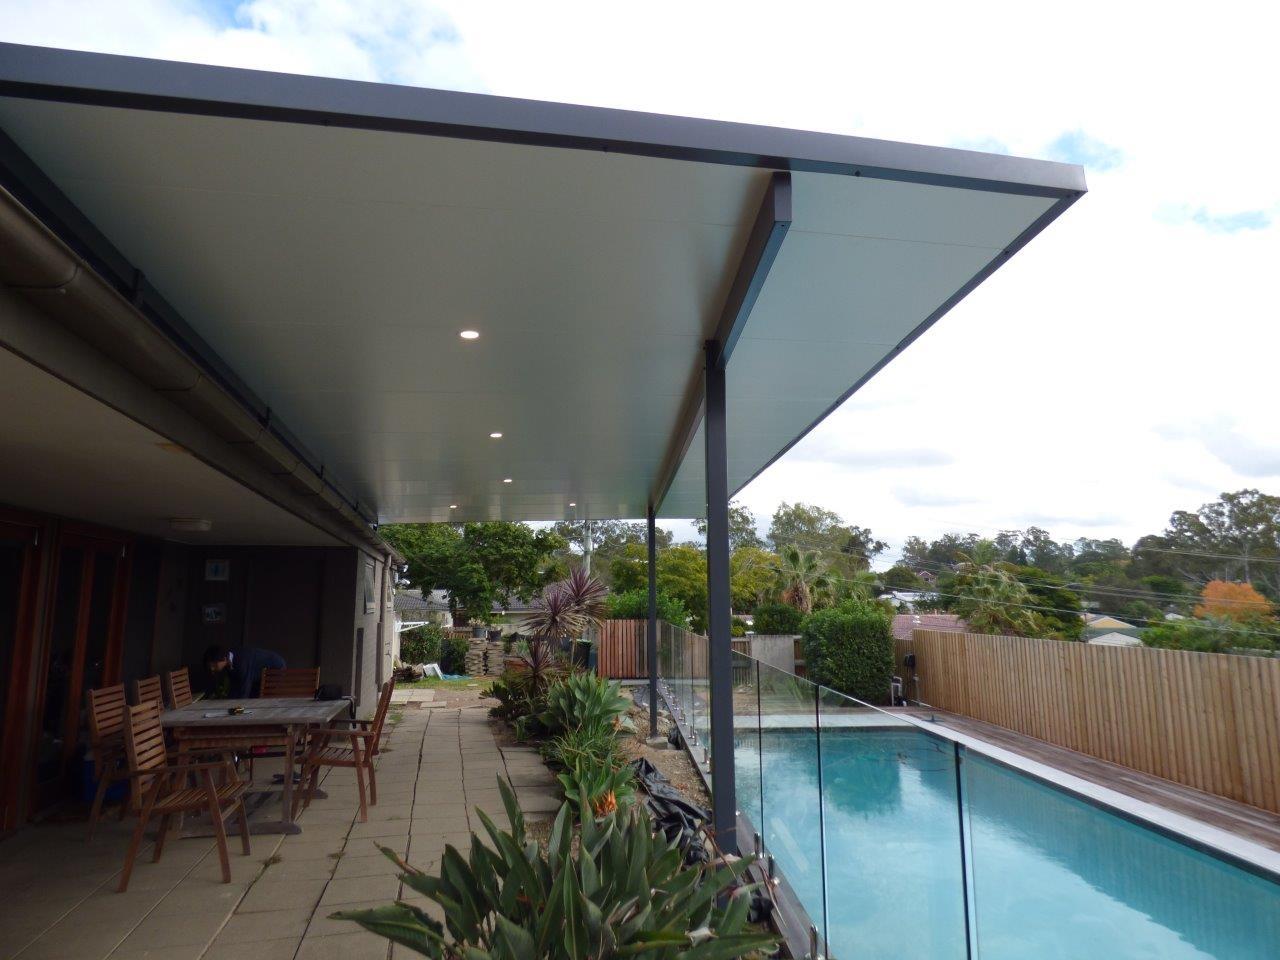 Modern outdoor patio pool area.